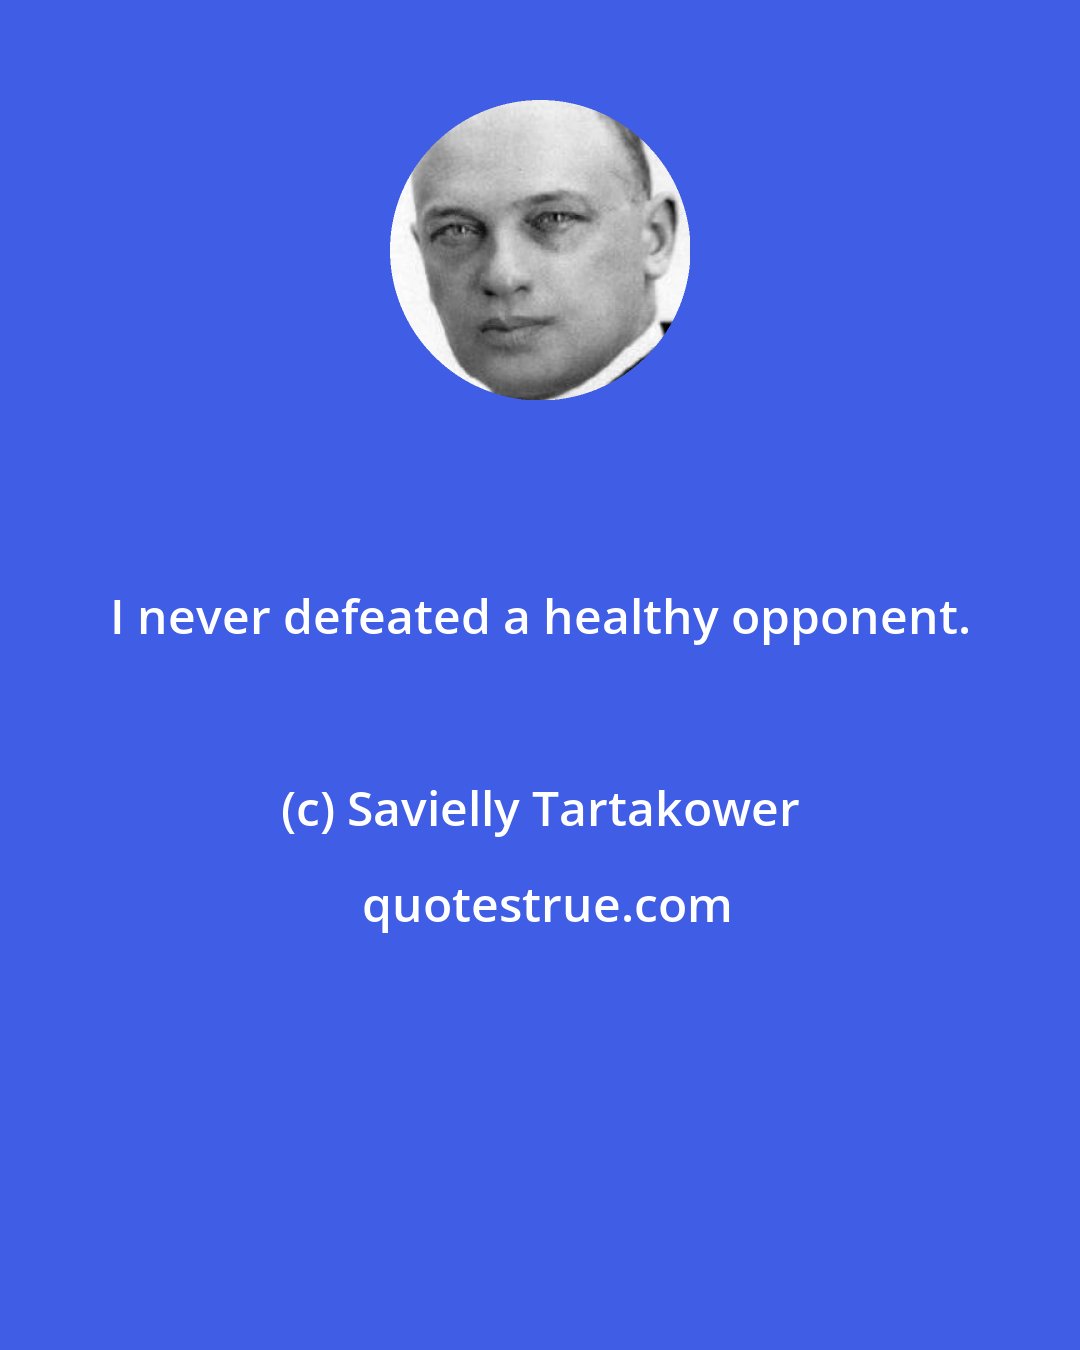 Savielly Tartakower: I never defeated a healthy opponent.